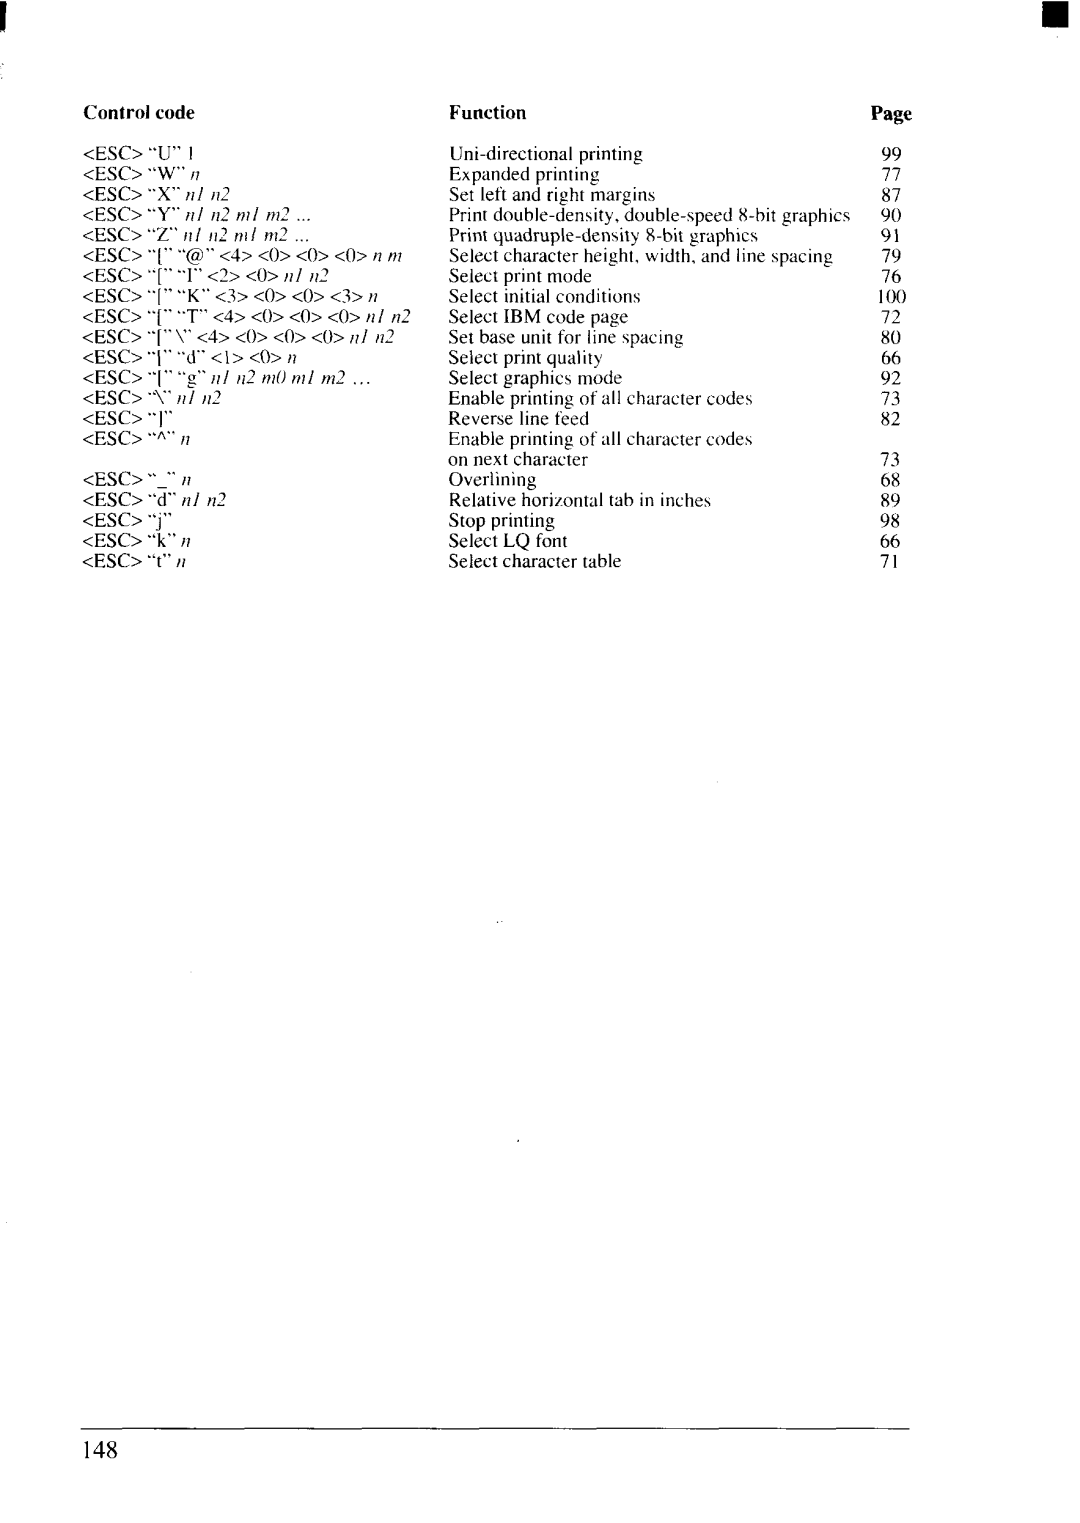 Star Micronics NX-2415II Uni-directionalprinting Expandedprinting, Selectcharacterh, S IBMcodepage Setbase unitf l s 